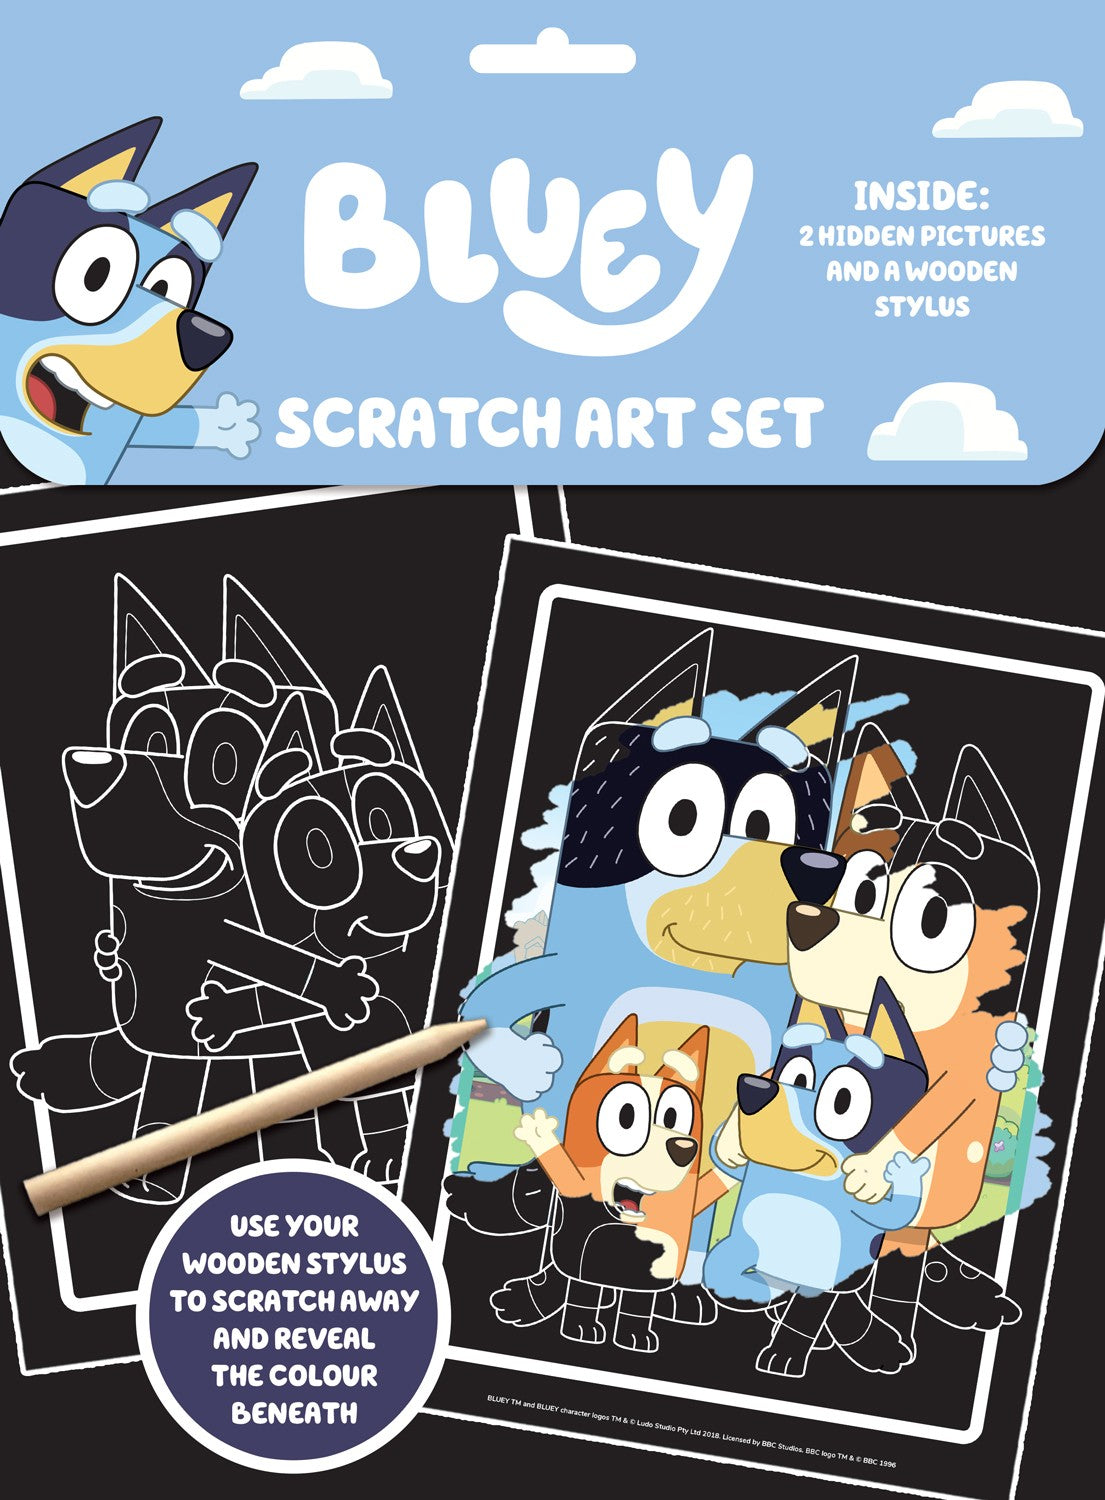 View Bluey Scratch Art Set information